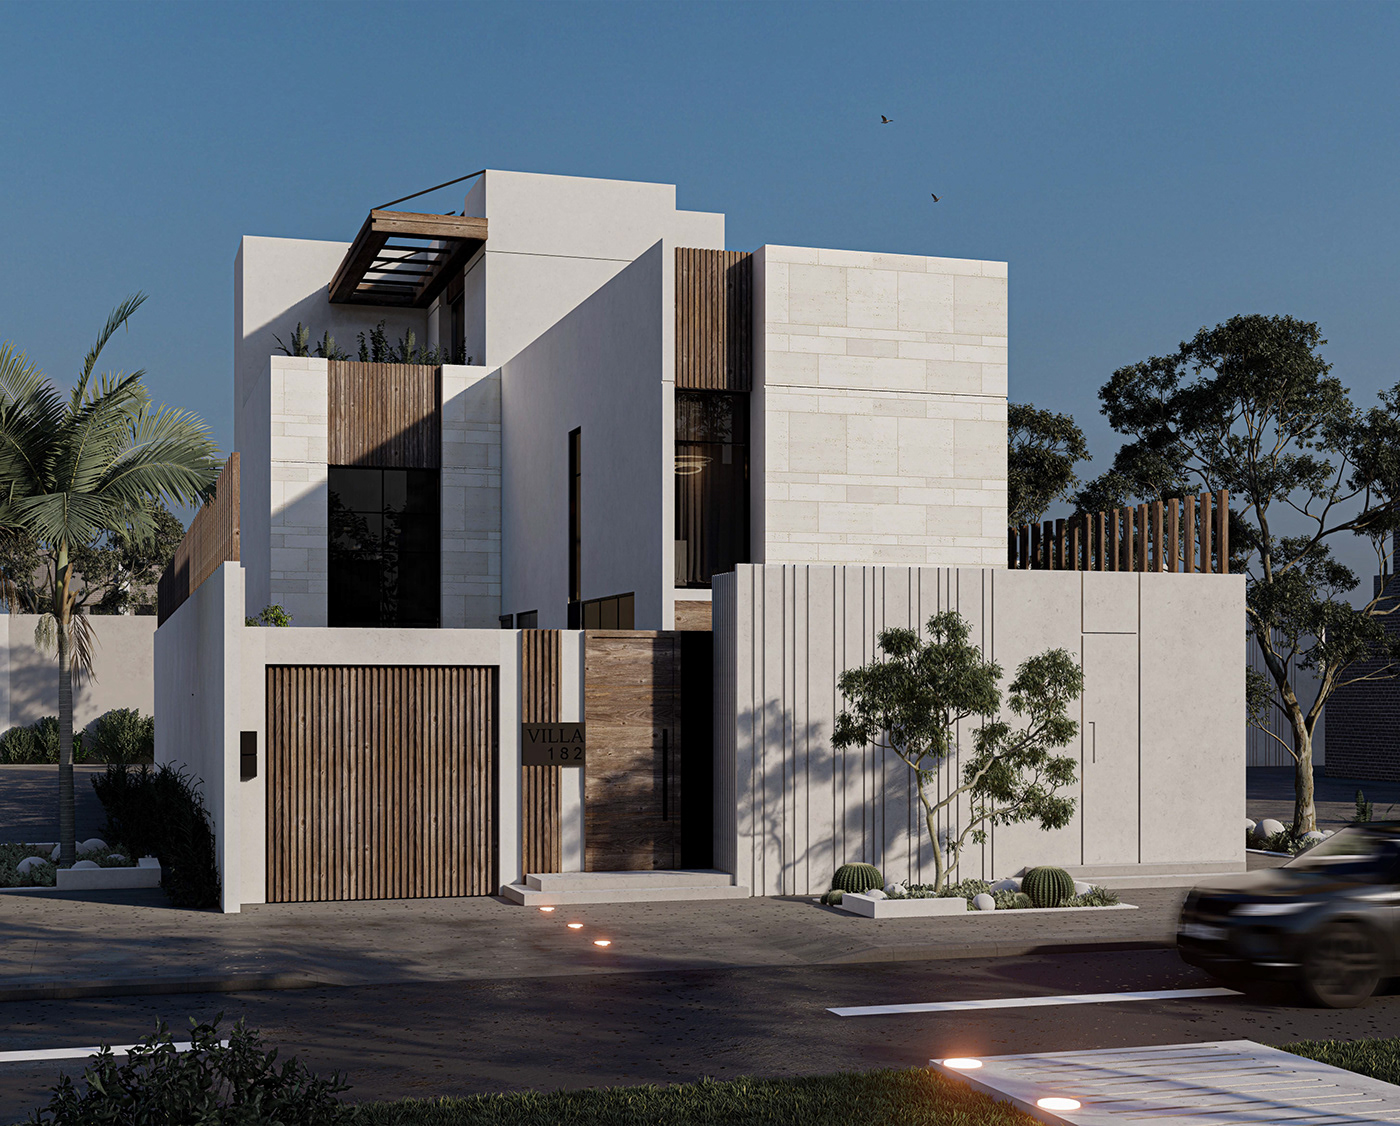 building architecture visualization Render modern exterior 3D Elevation facade design